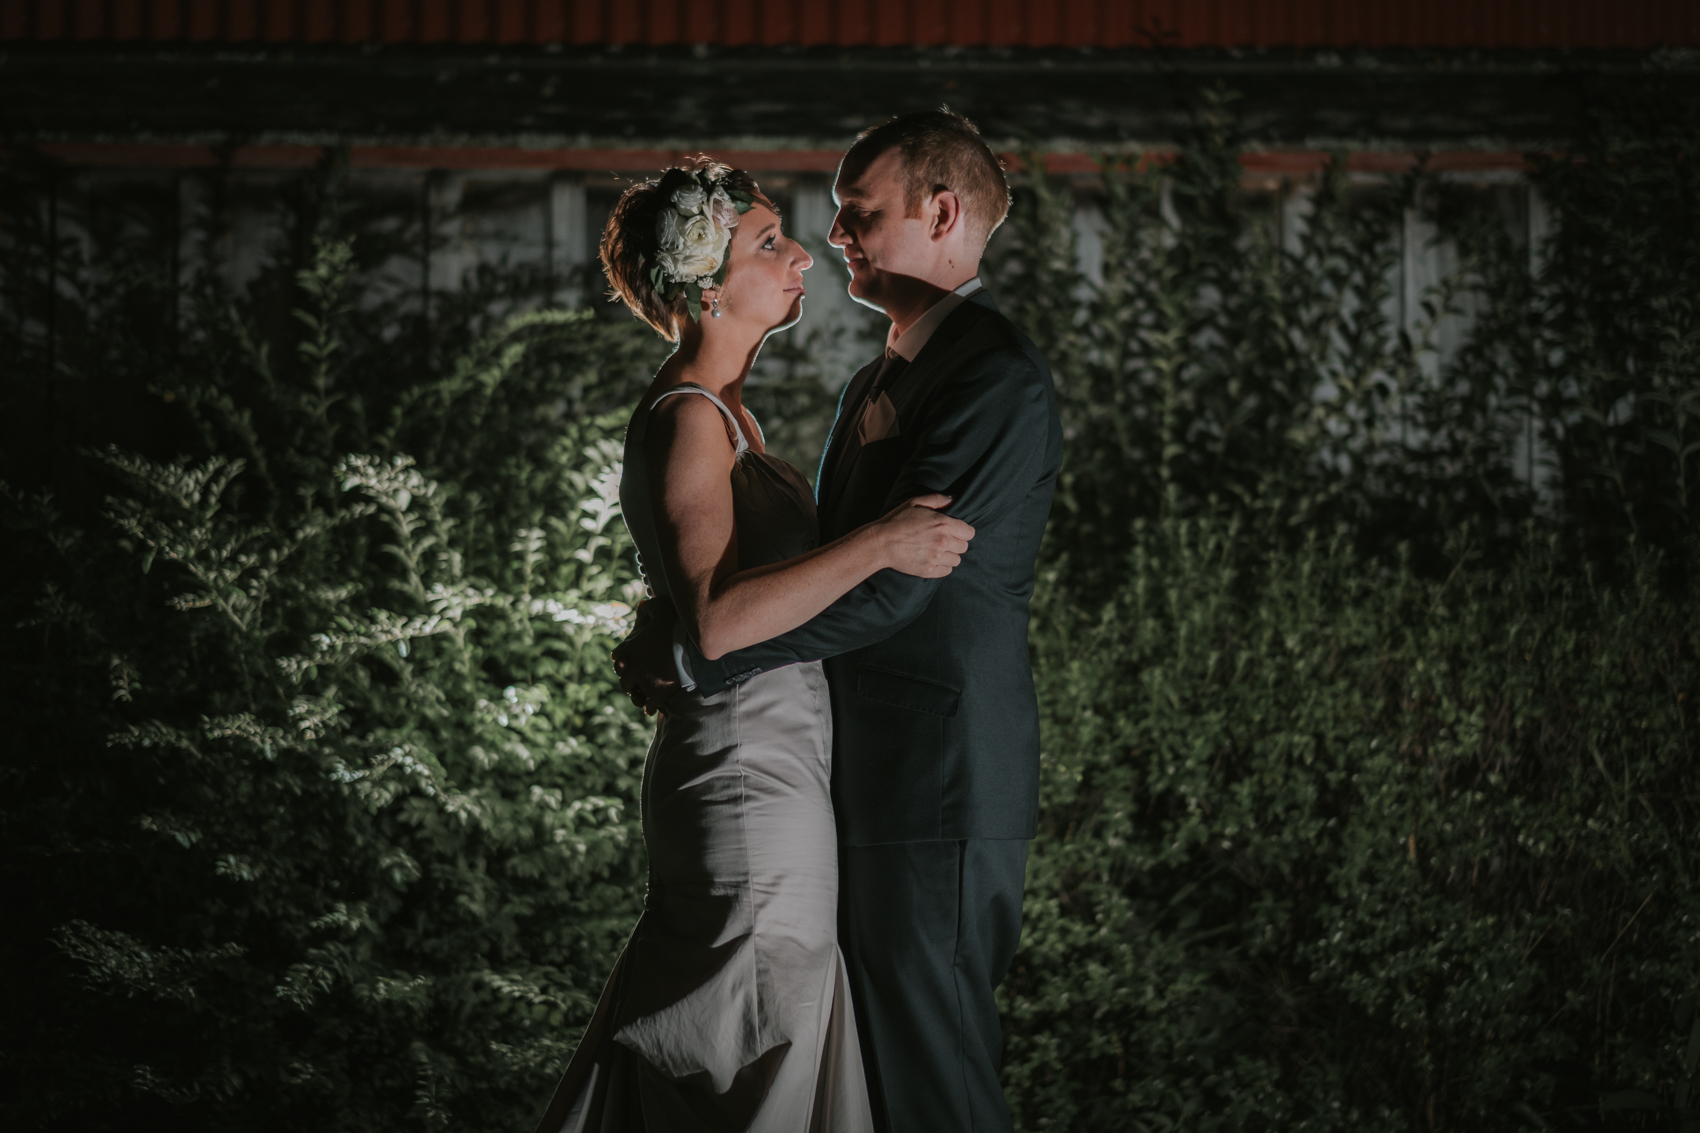 Haemia + Dan, Matakana, The Wool Shed, Wedding Photography Auckland